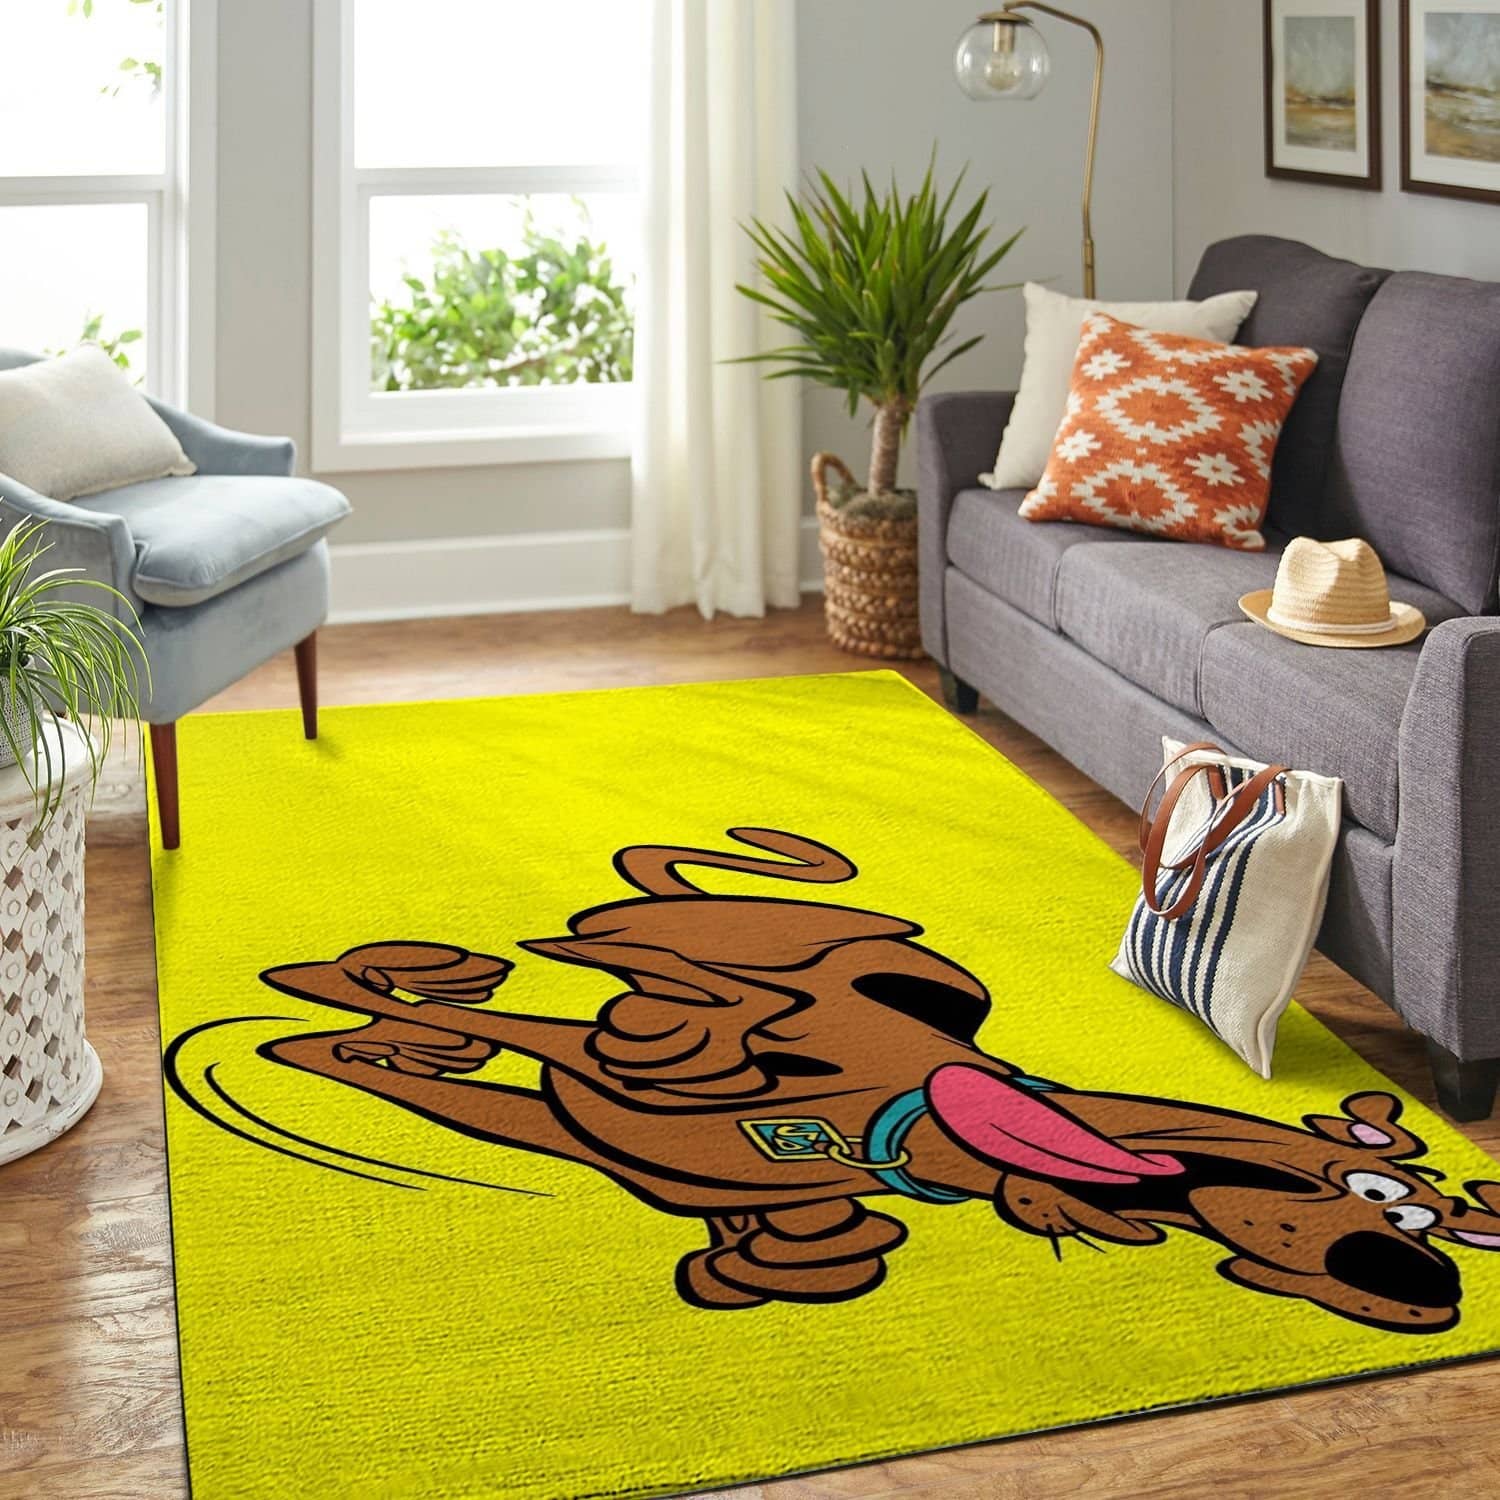 Amazon Scooby Dog Living Room Area No6515 Rug